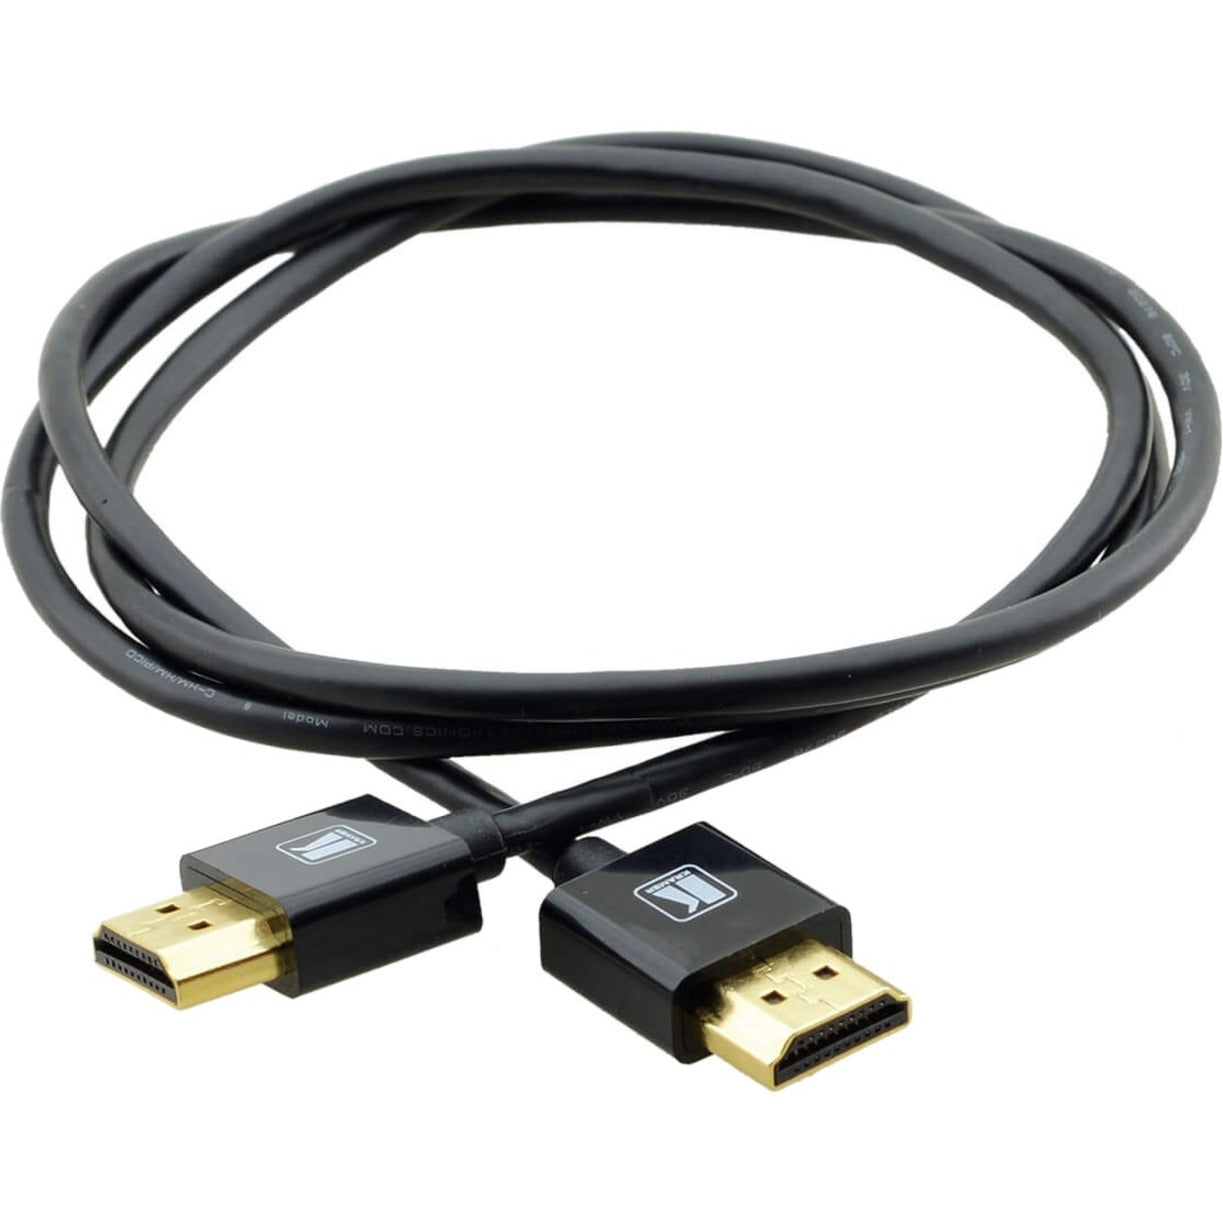 Kramer C-HM/HM/PICO/BK-6 Ultra Slim Flexible High-Speed HDMI Cable with Ethernet - Black, 6 ft, Lip Sync, x.v.Color, CEC